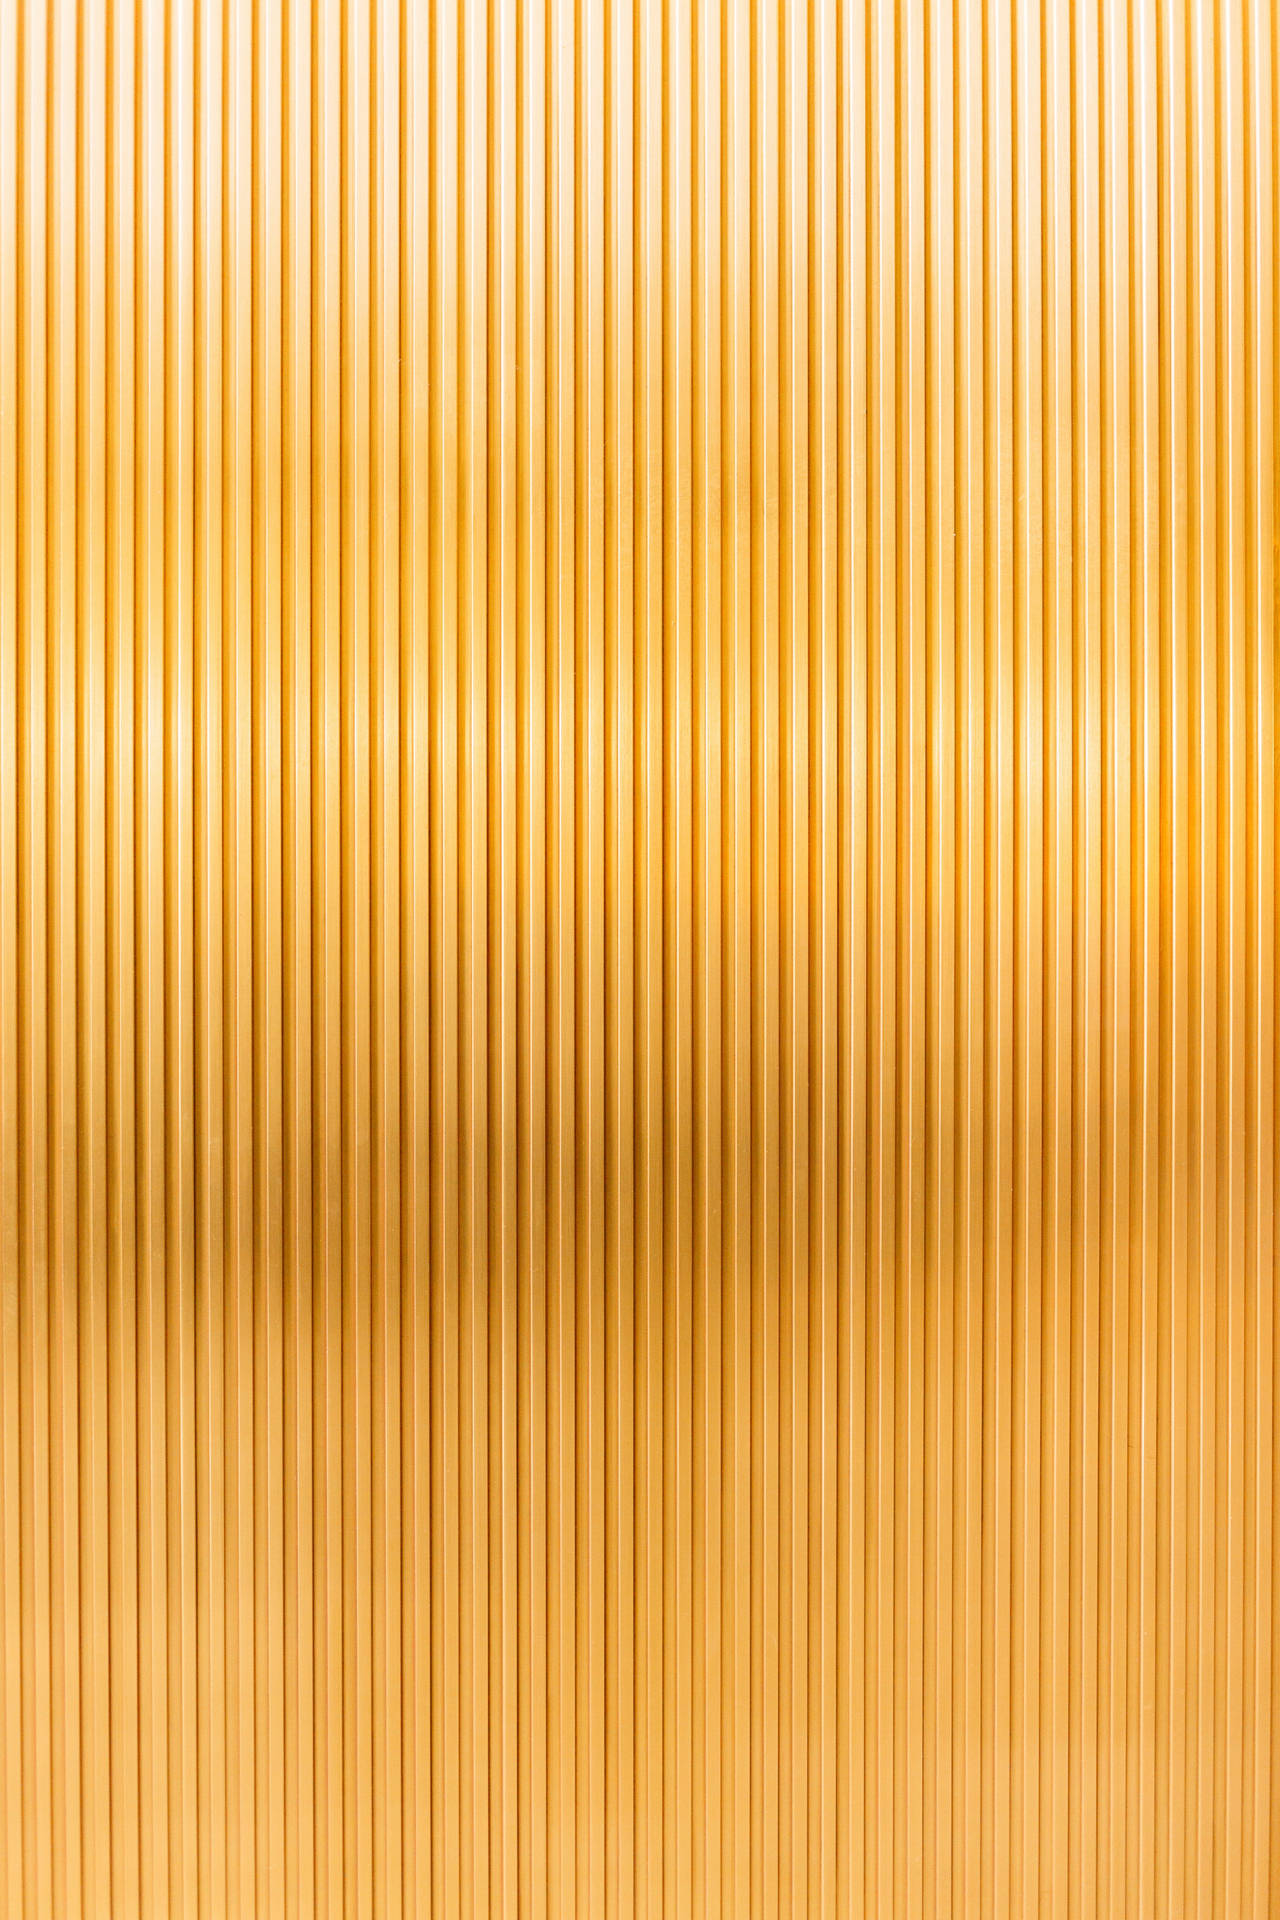 Redmi 4k Gold Stripes Wallpaper